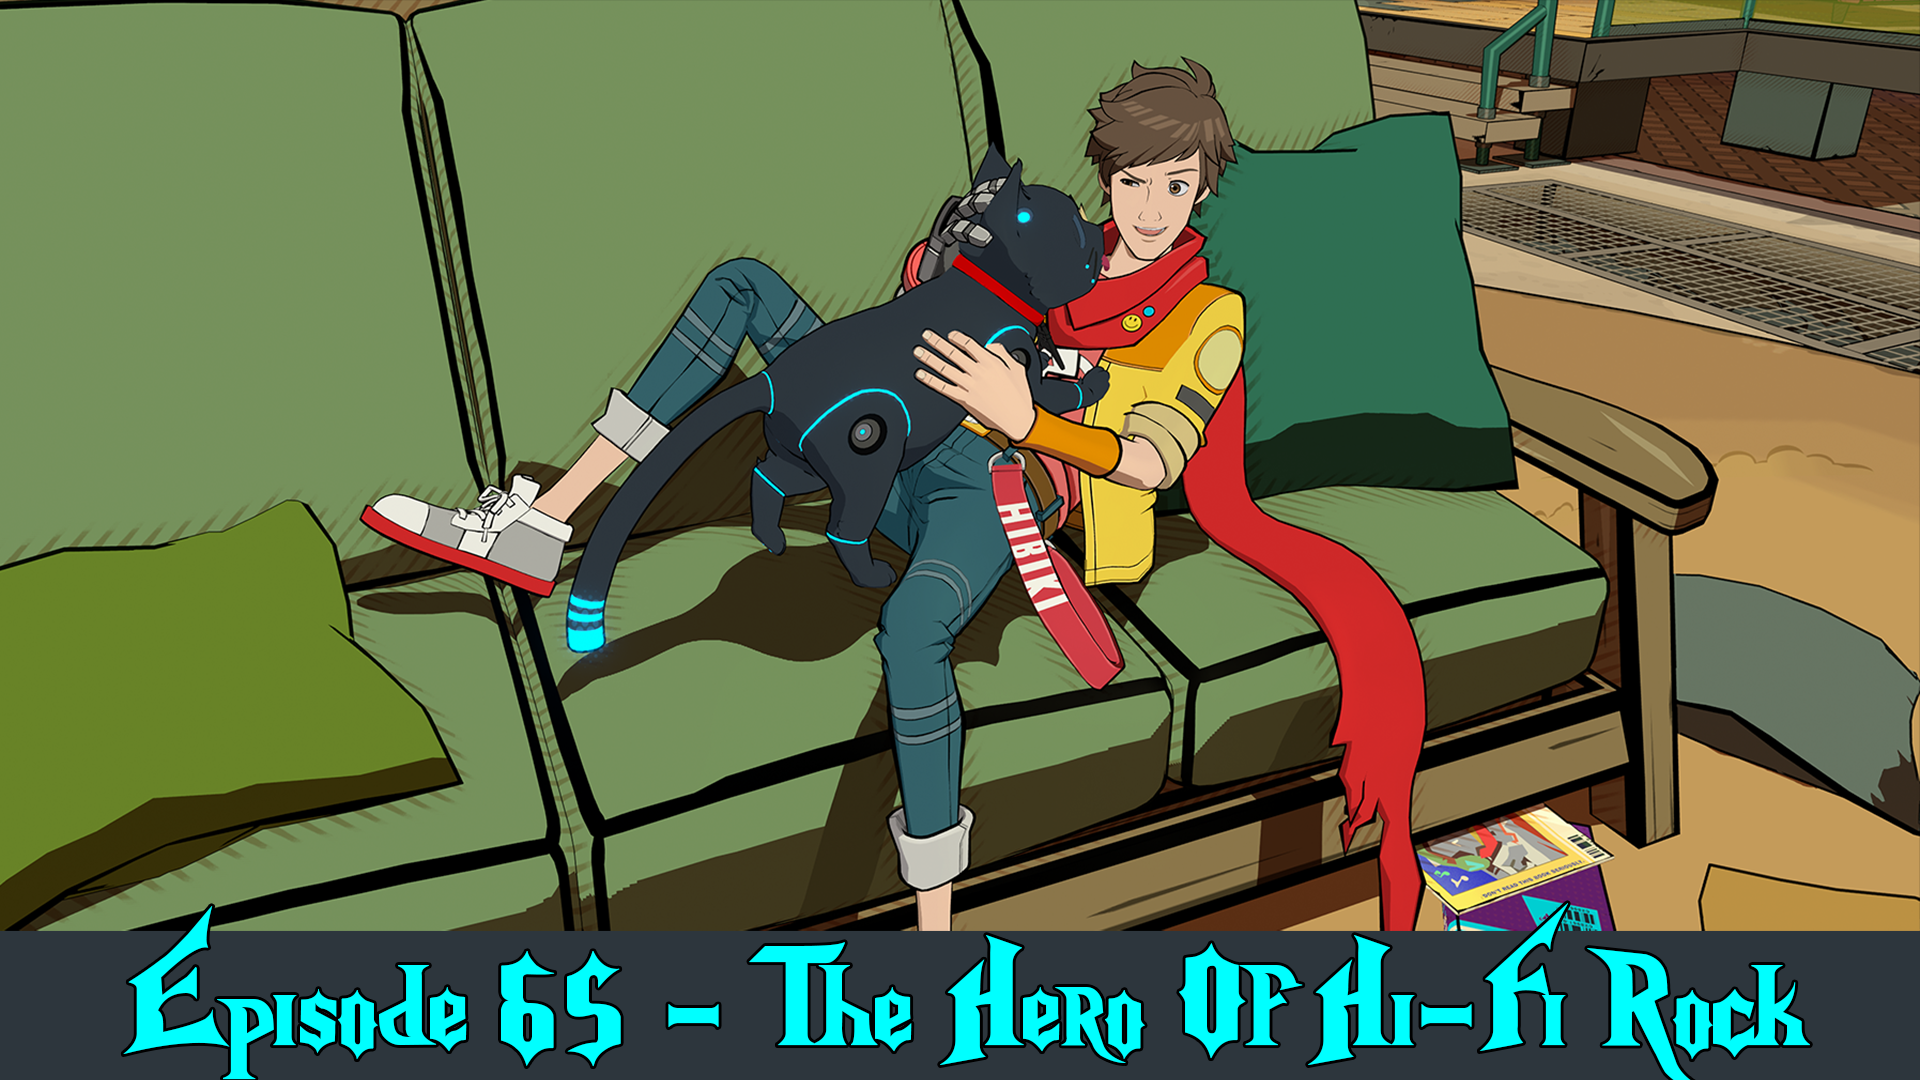 Episode 65 - The Hero Of Hi-Fi Rock